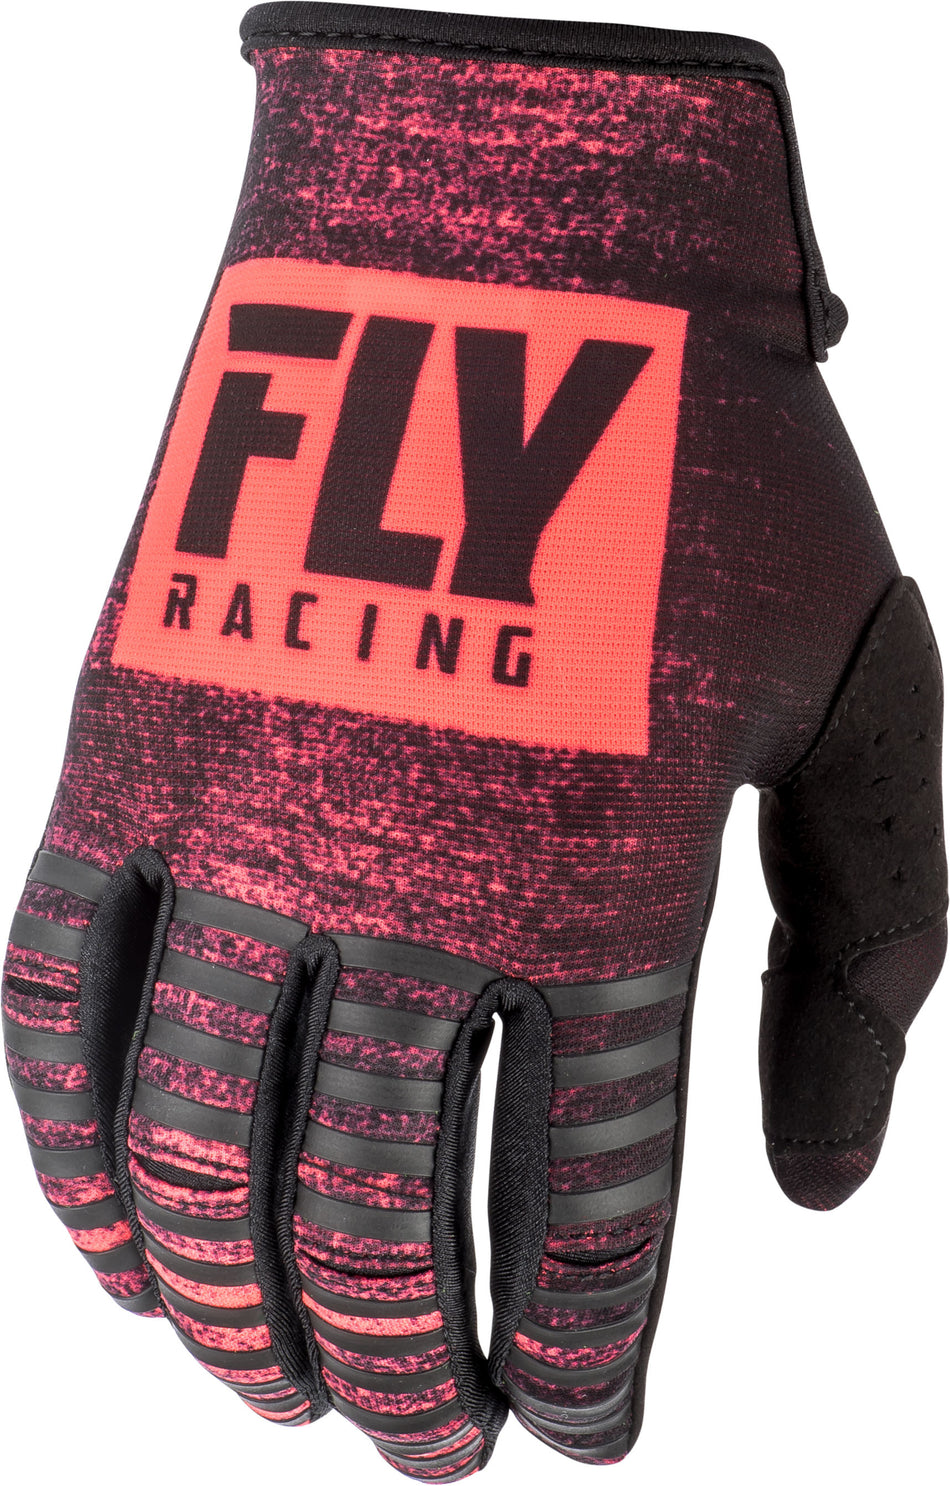 FLY RACING Kinetic Noiz Gloves Neon Red/Black Sz 05 372-51205